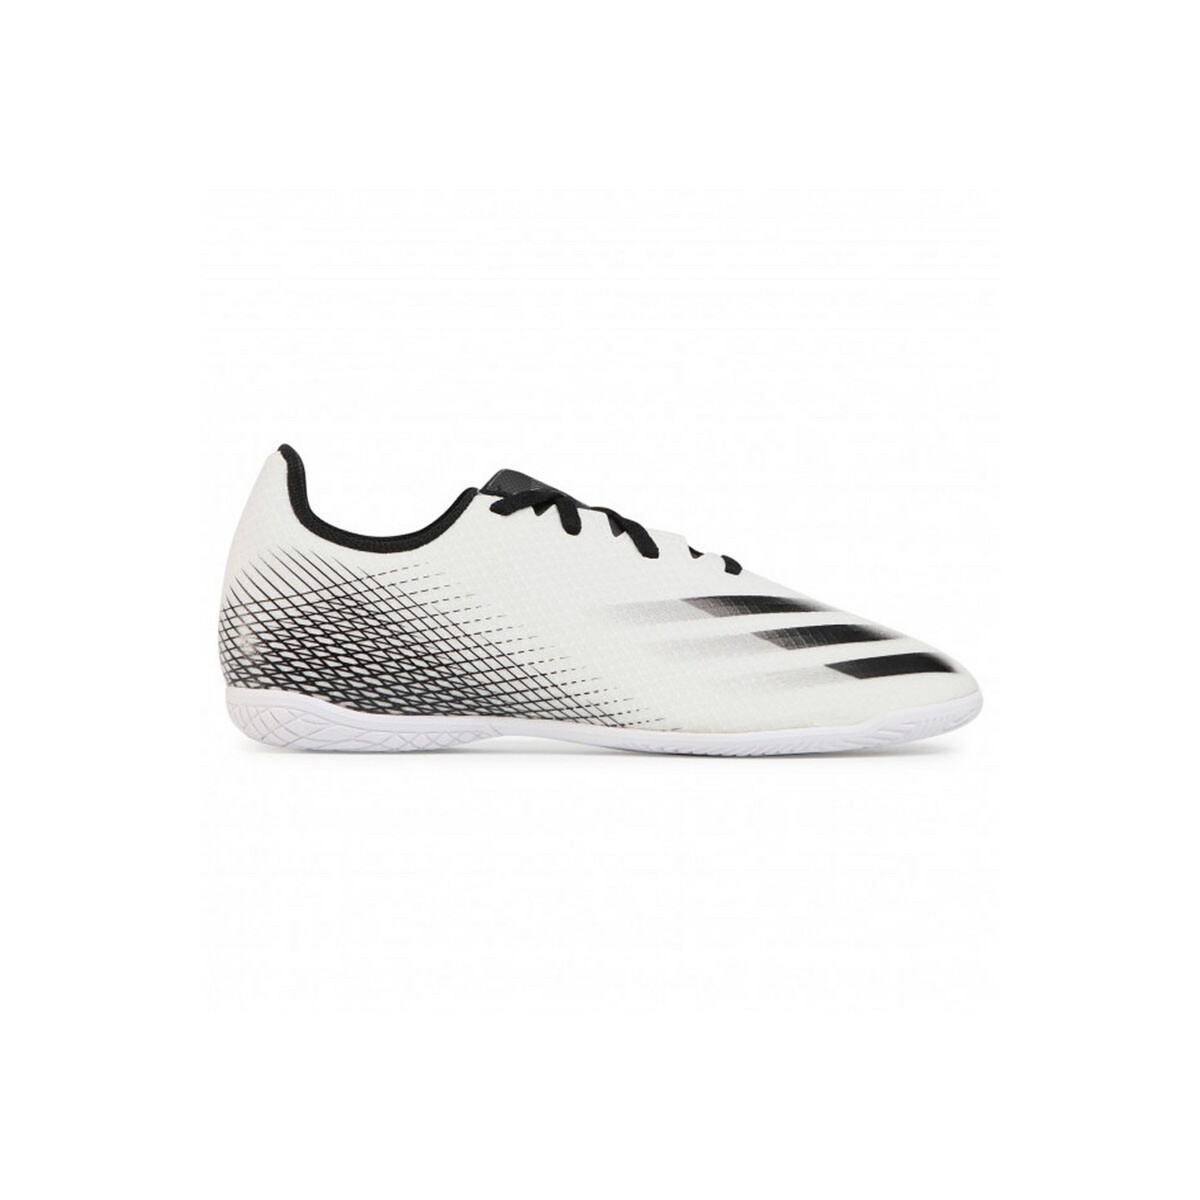 Adidas Mens Sports Shoes FW6797, 11